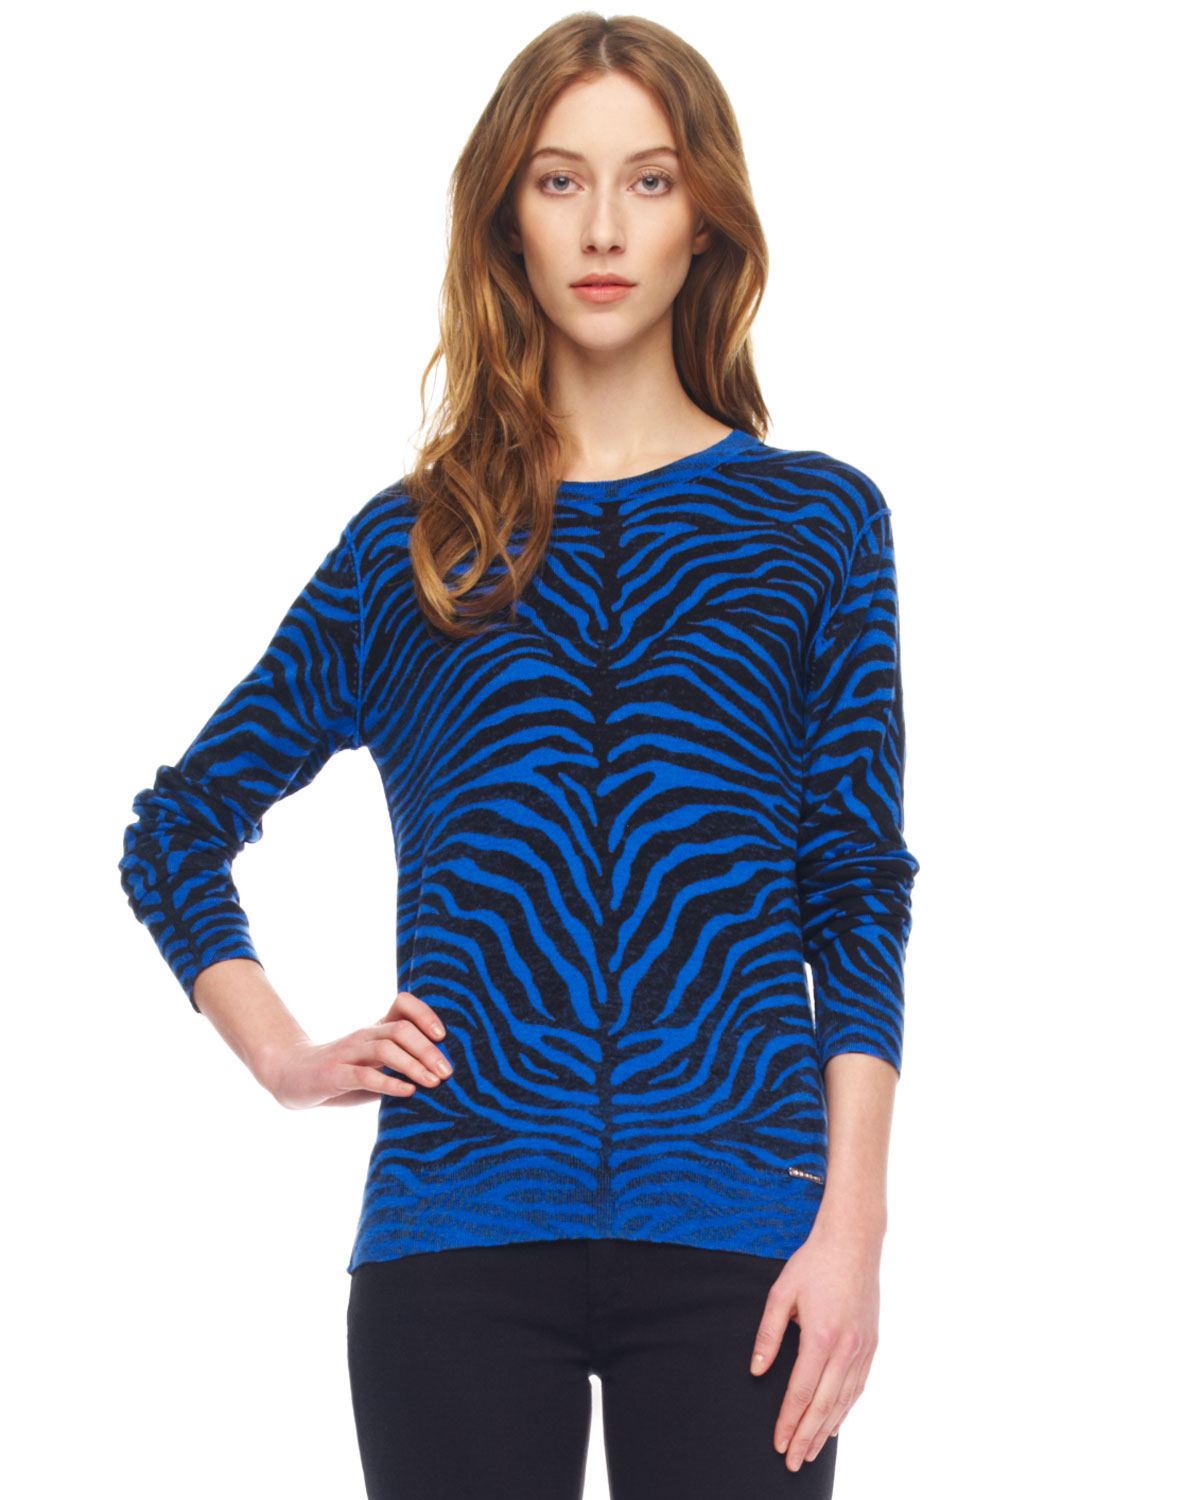 Lyst - Michael Kors Zebra Print Sweater in Blue